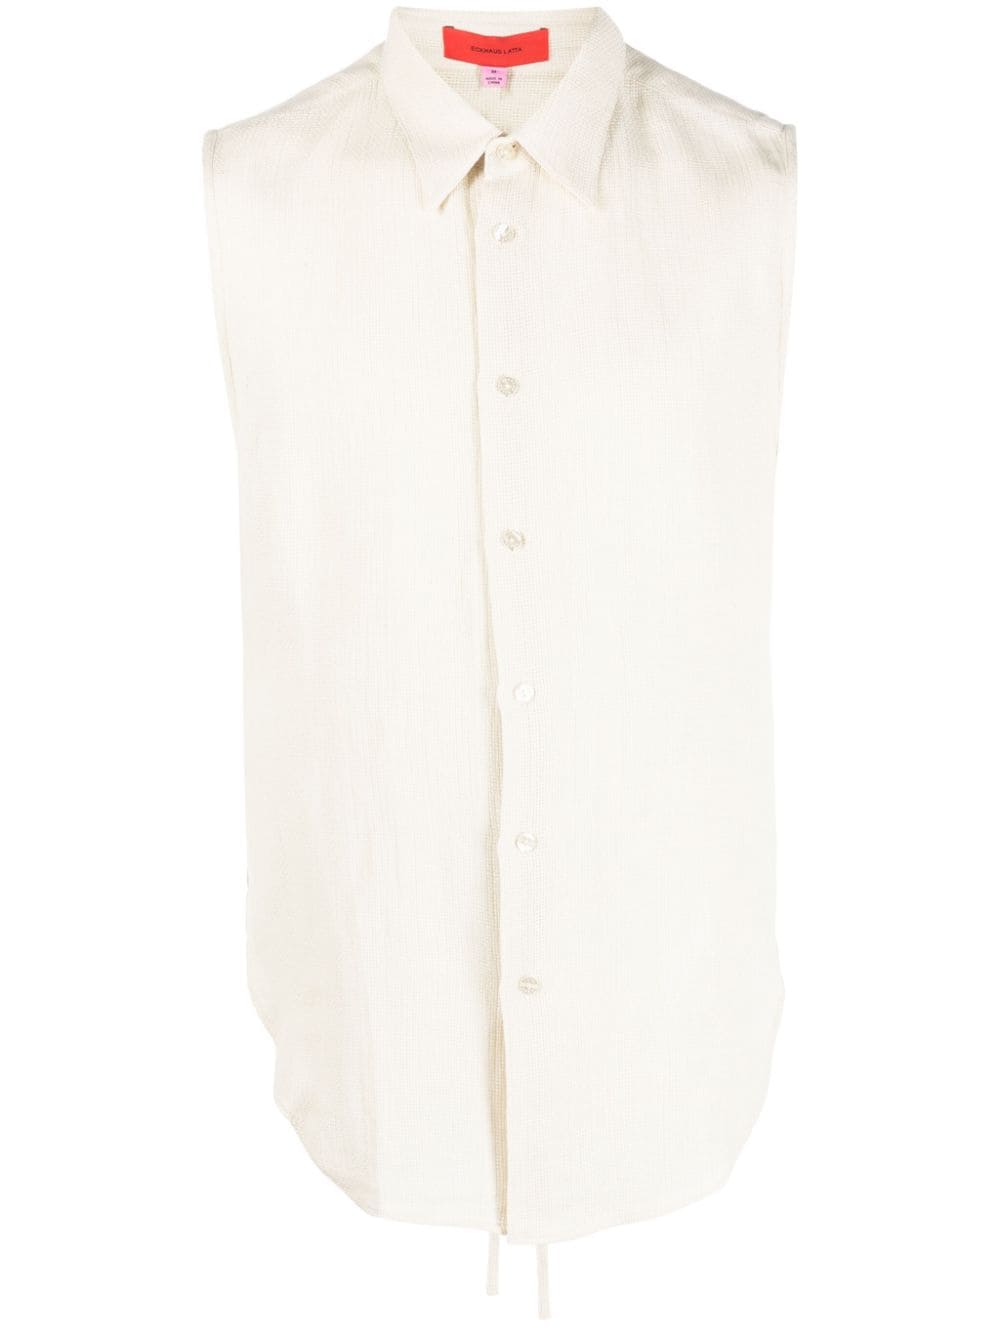 White Sleeveless Button Up Shirt